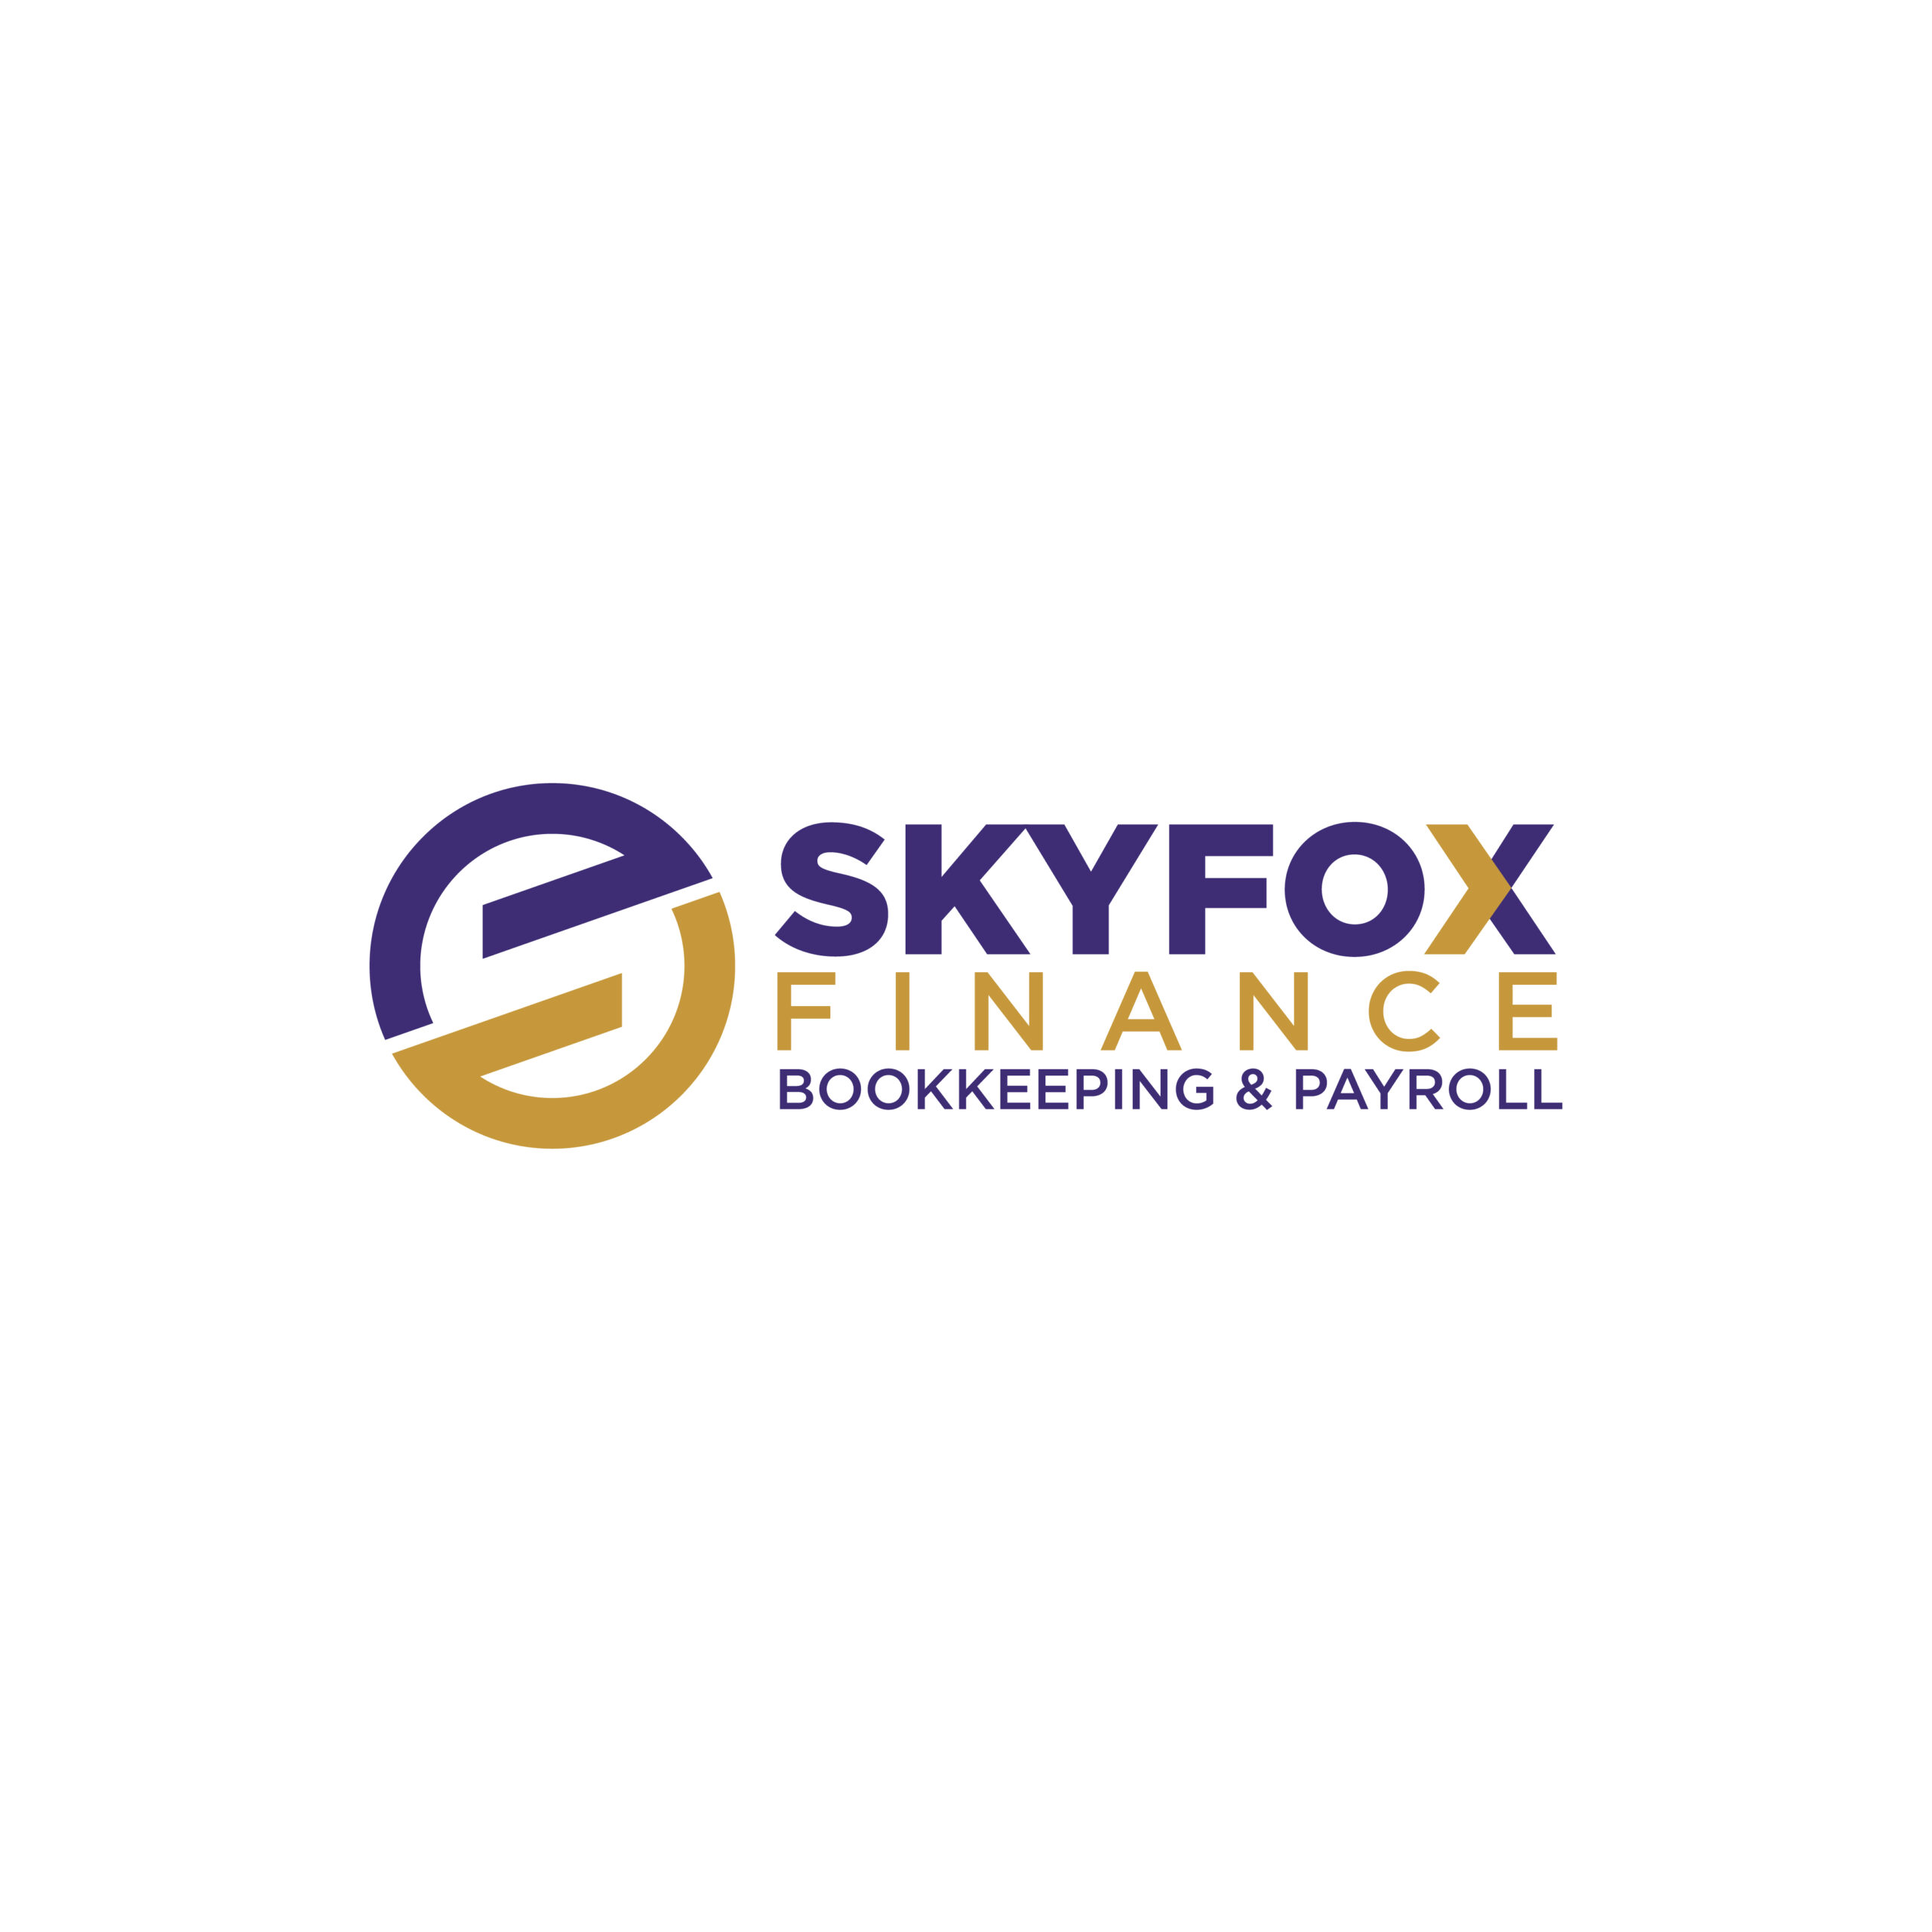 Skyfox Finance Bookkeeping and Payroll Logo